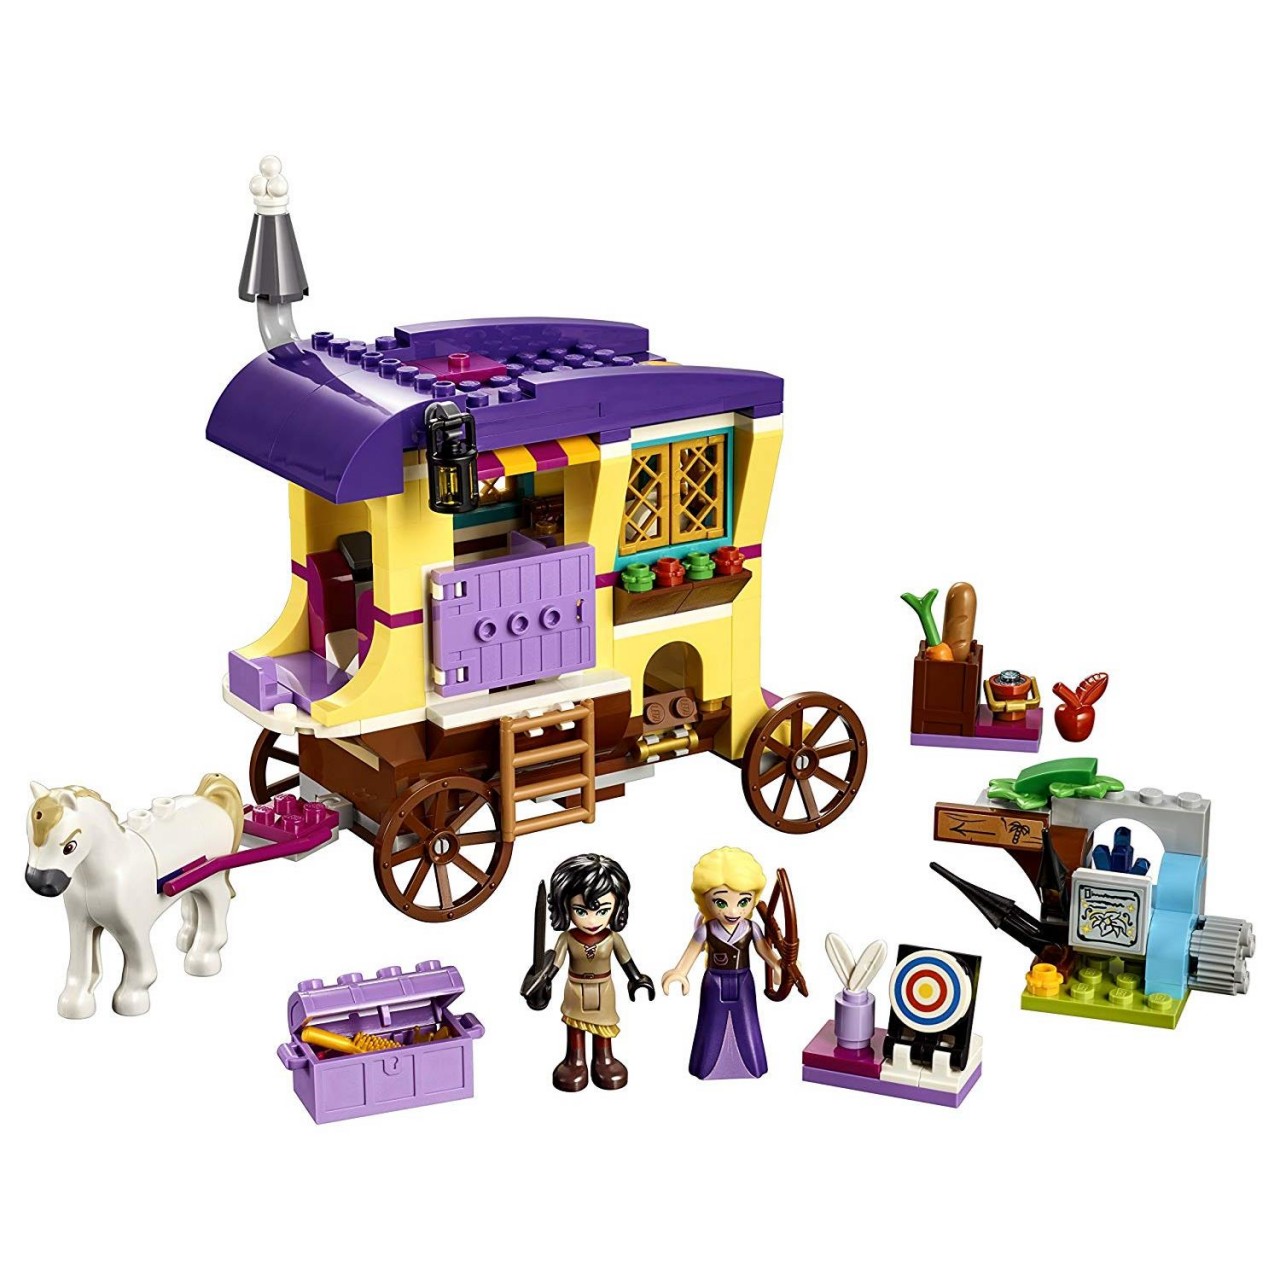 LEGO DISNEY 41157 Rapunzels Reisekutsche